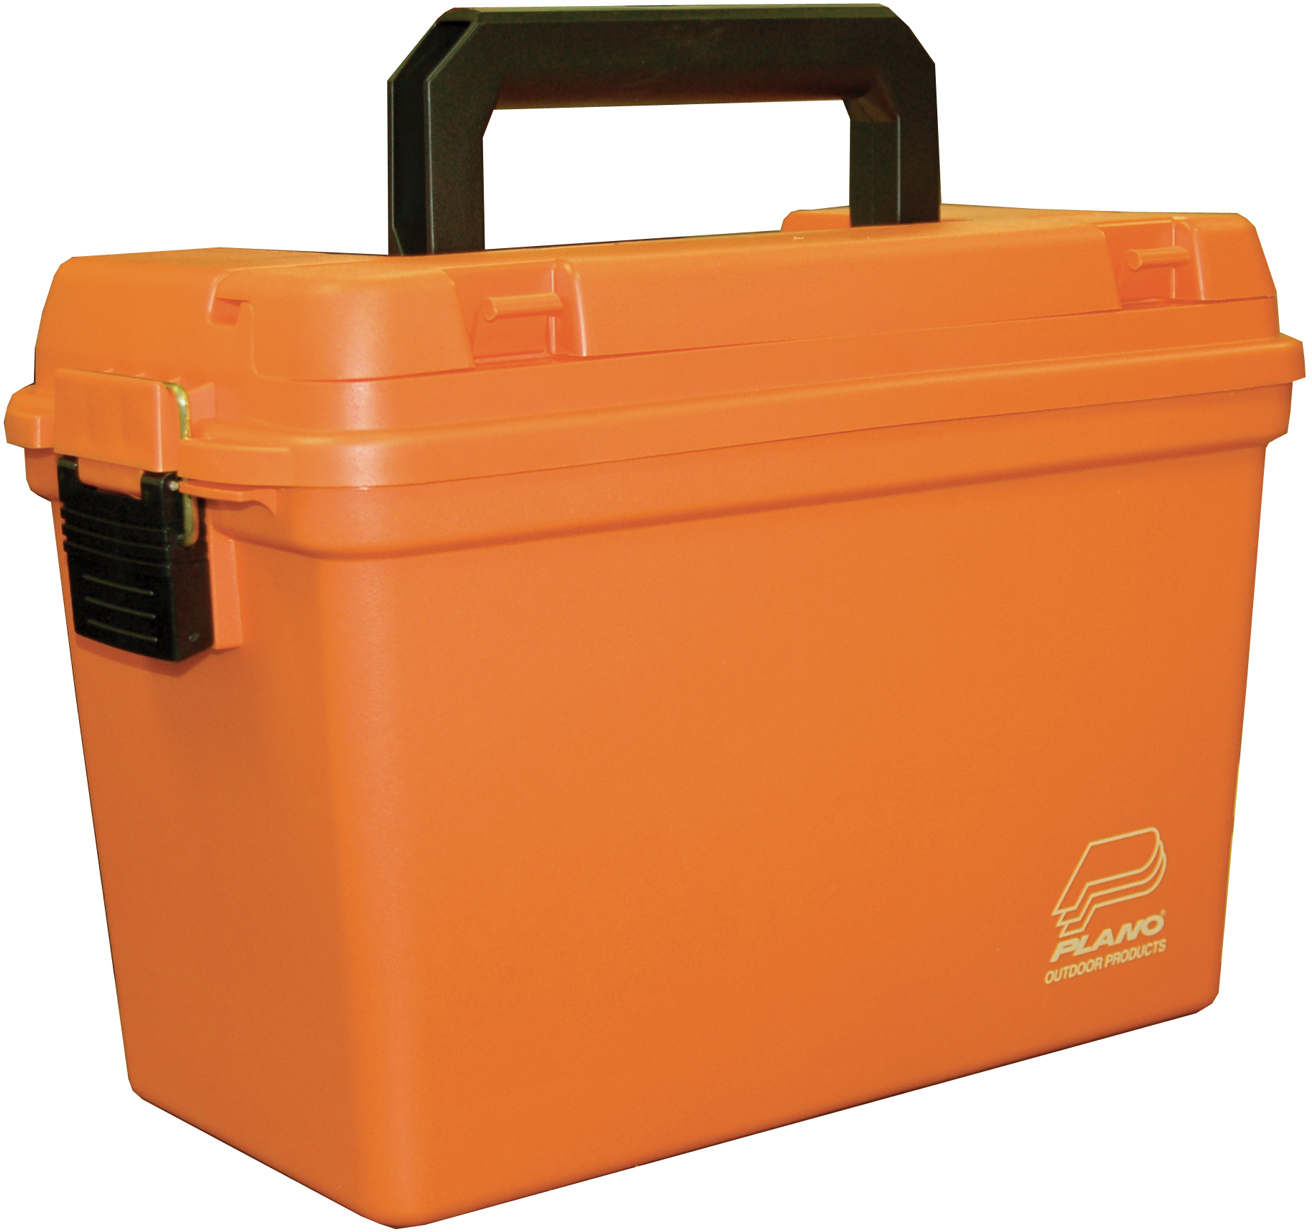 Plano Dry Storage Box with Tray